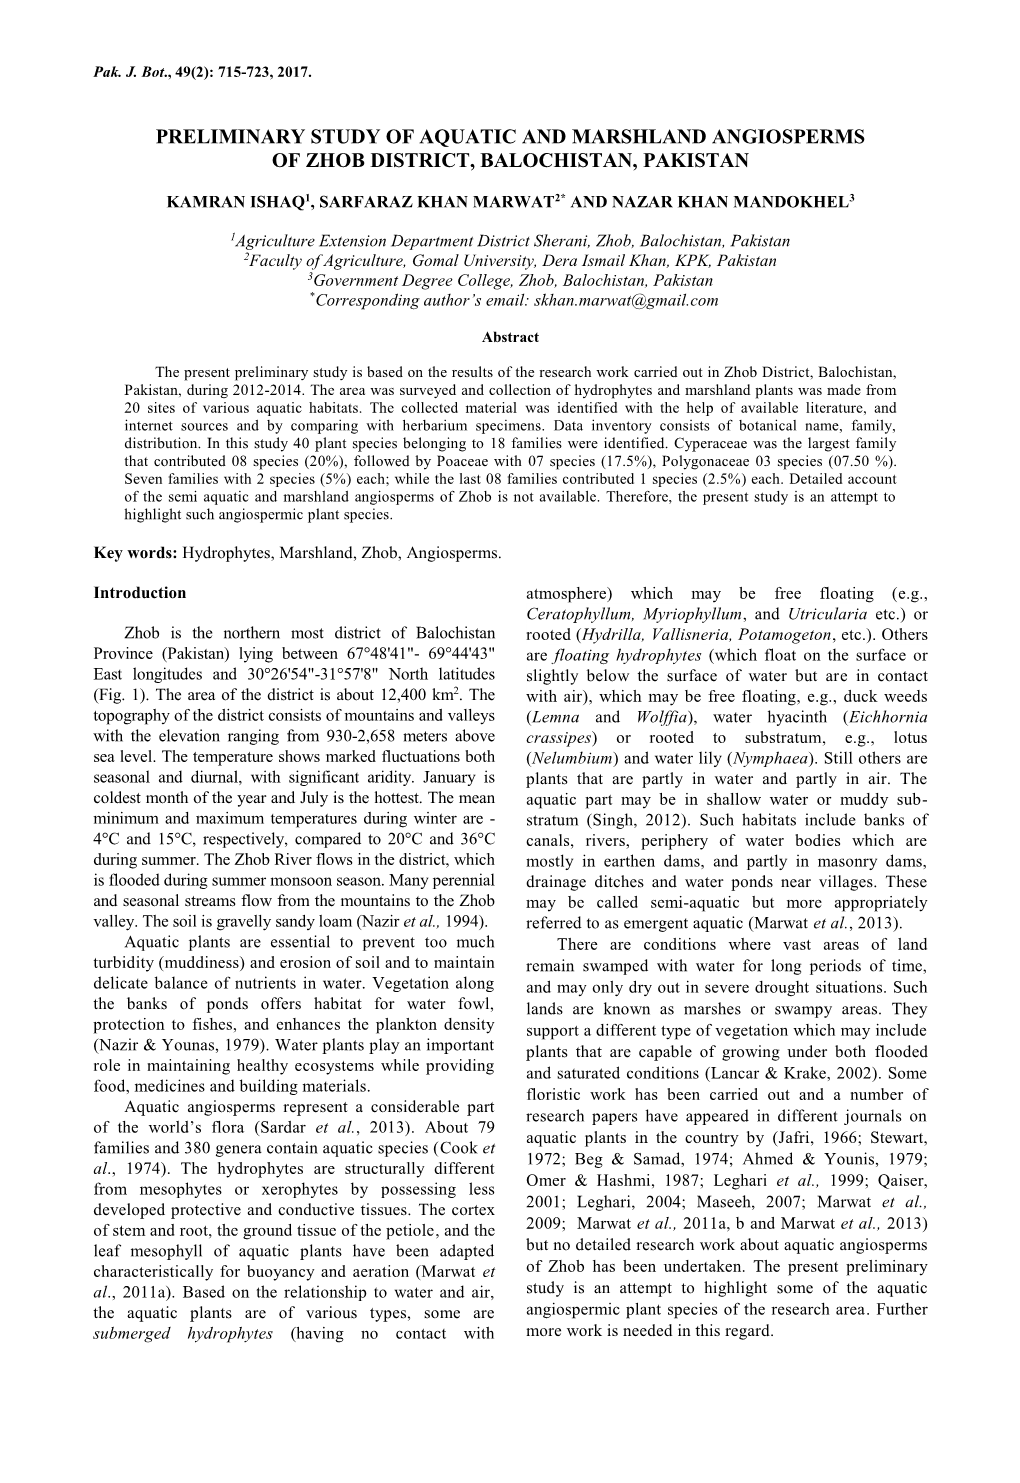 Preliminary Study of Aquatic and Marshland Angiosperms of Zhob District, Balochistan, Pakistan